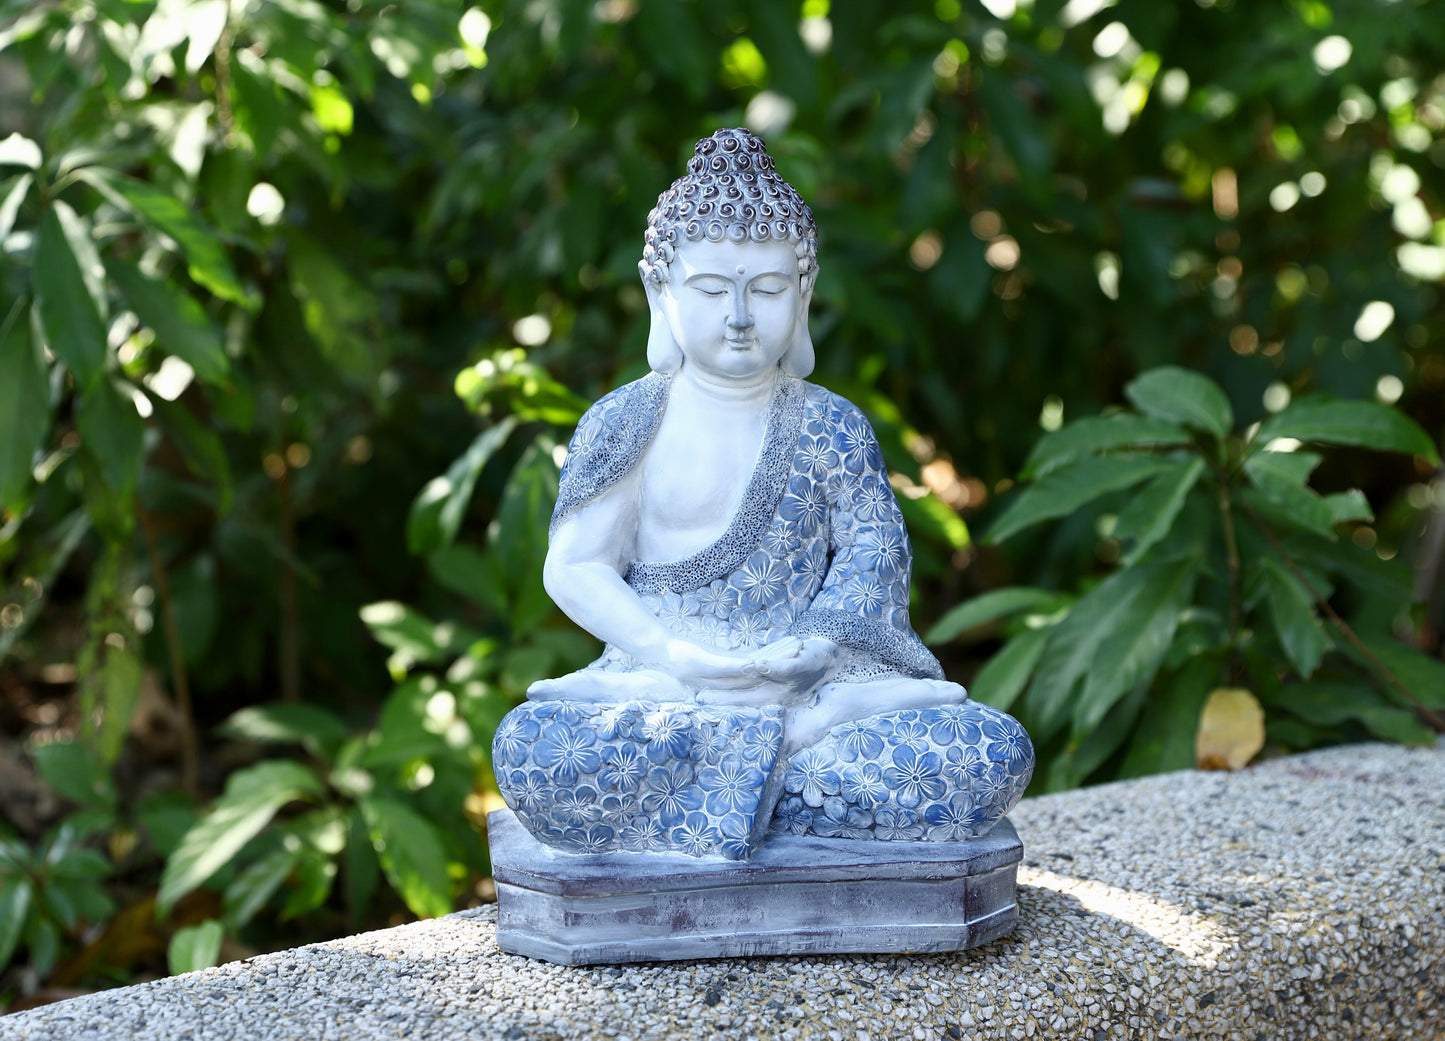 Meditating Buddha with High-Power Solar Spotlight